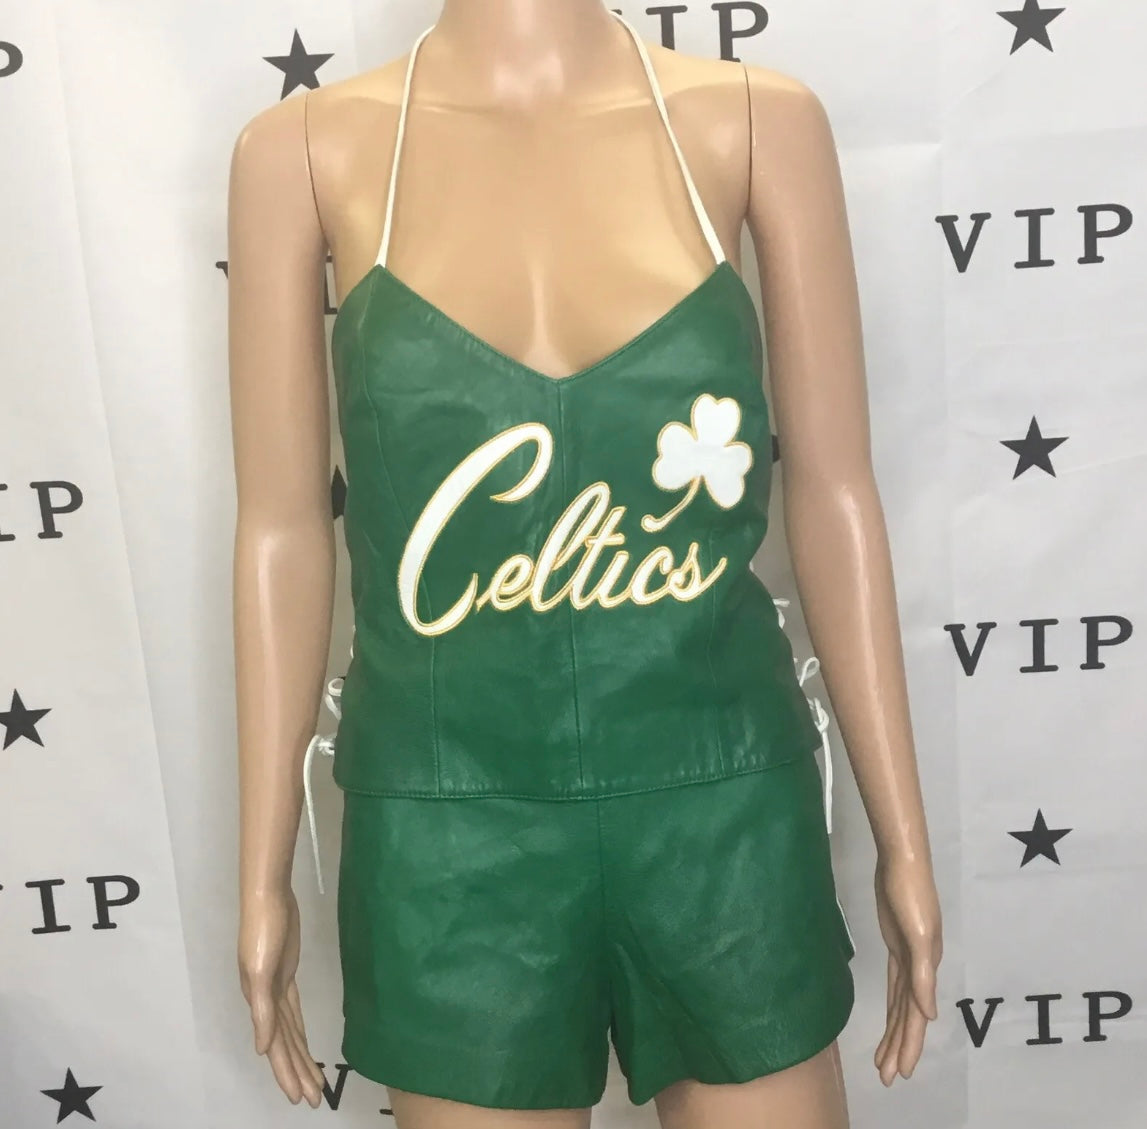 Real leather Celtics event uniform